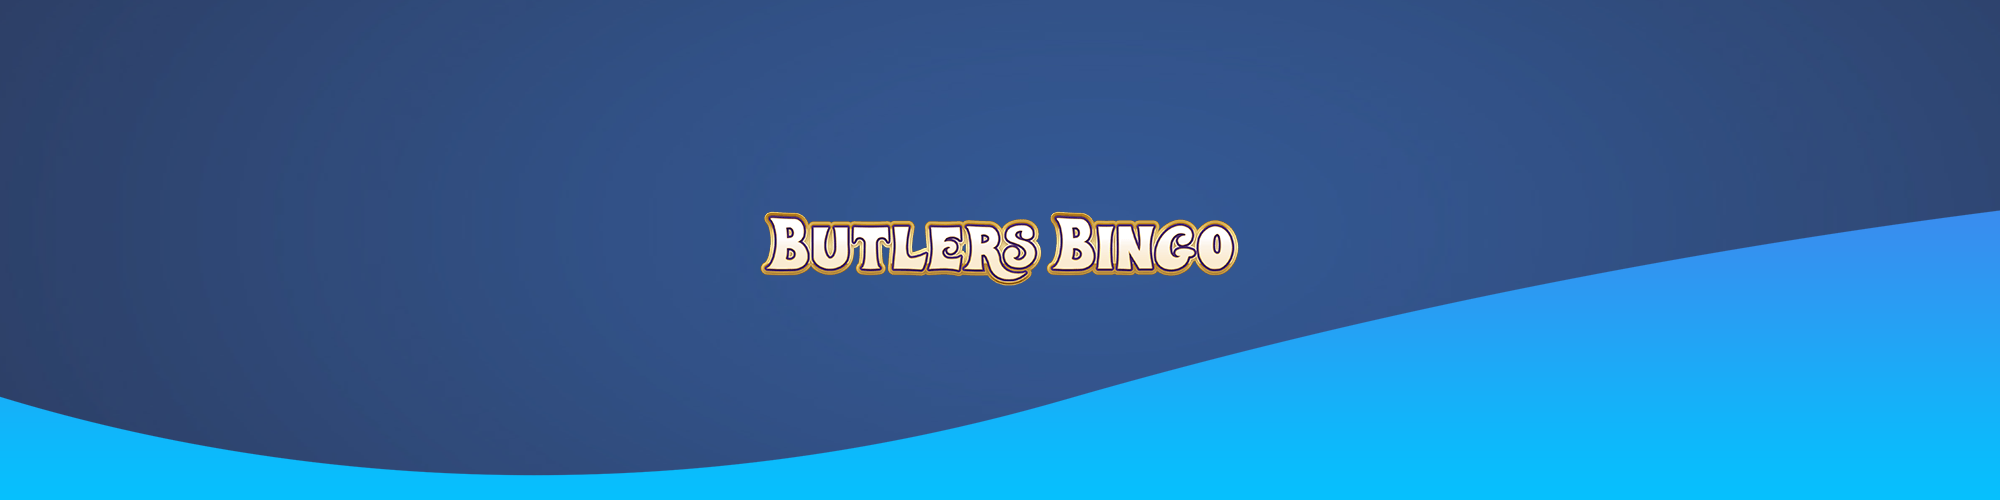 Butlers Bingo Alternative on EazeGames